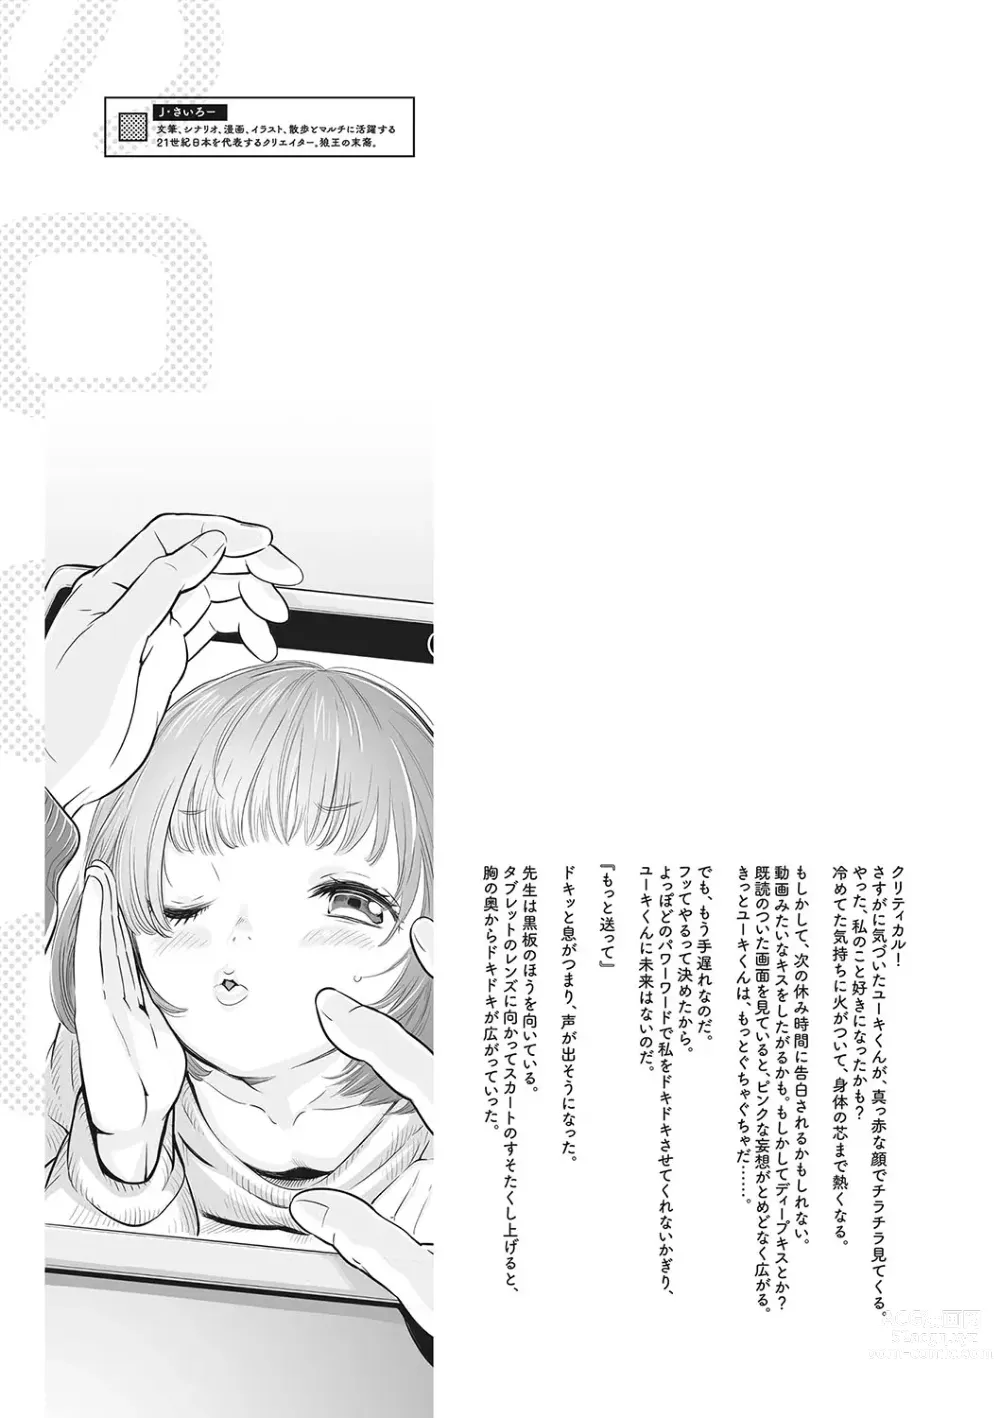 Page 96 of manga Little Girl Strike Vol. 30